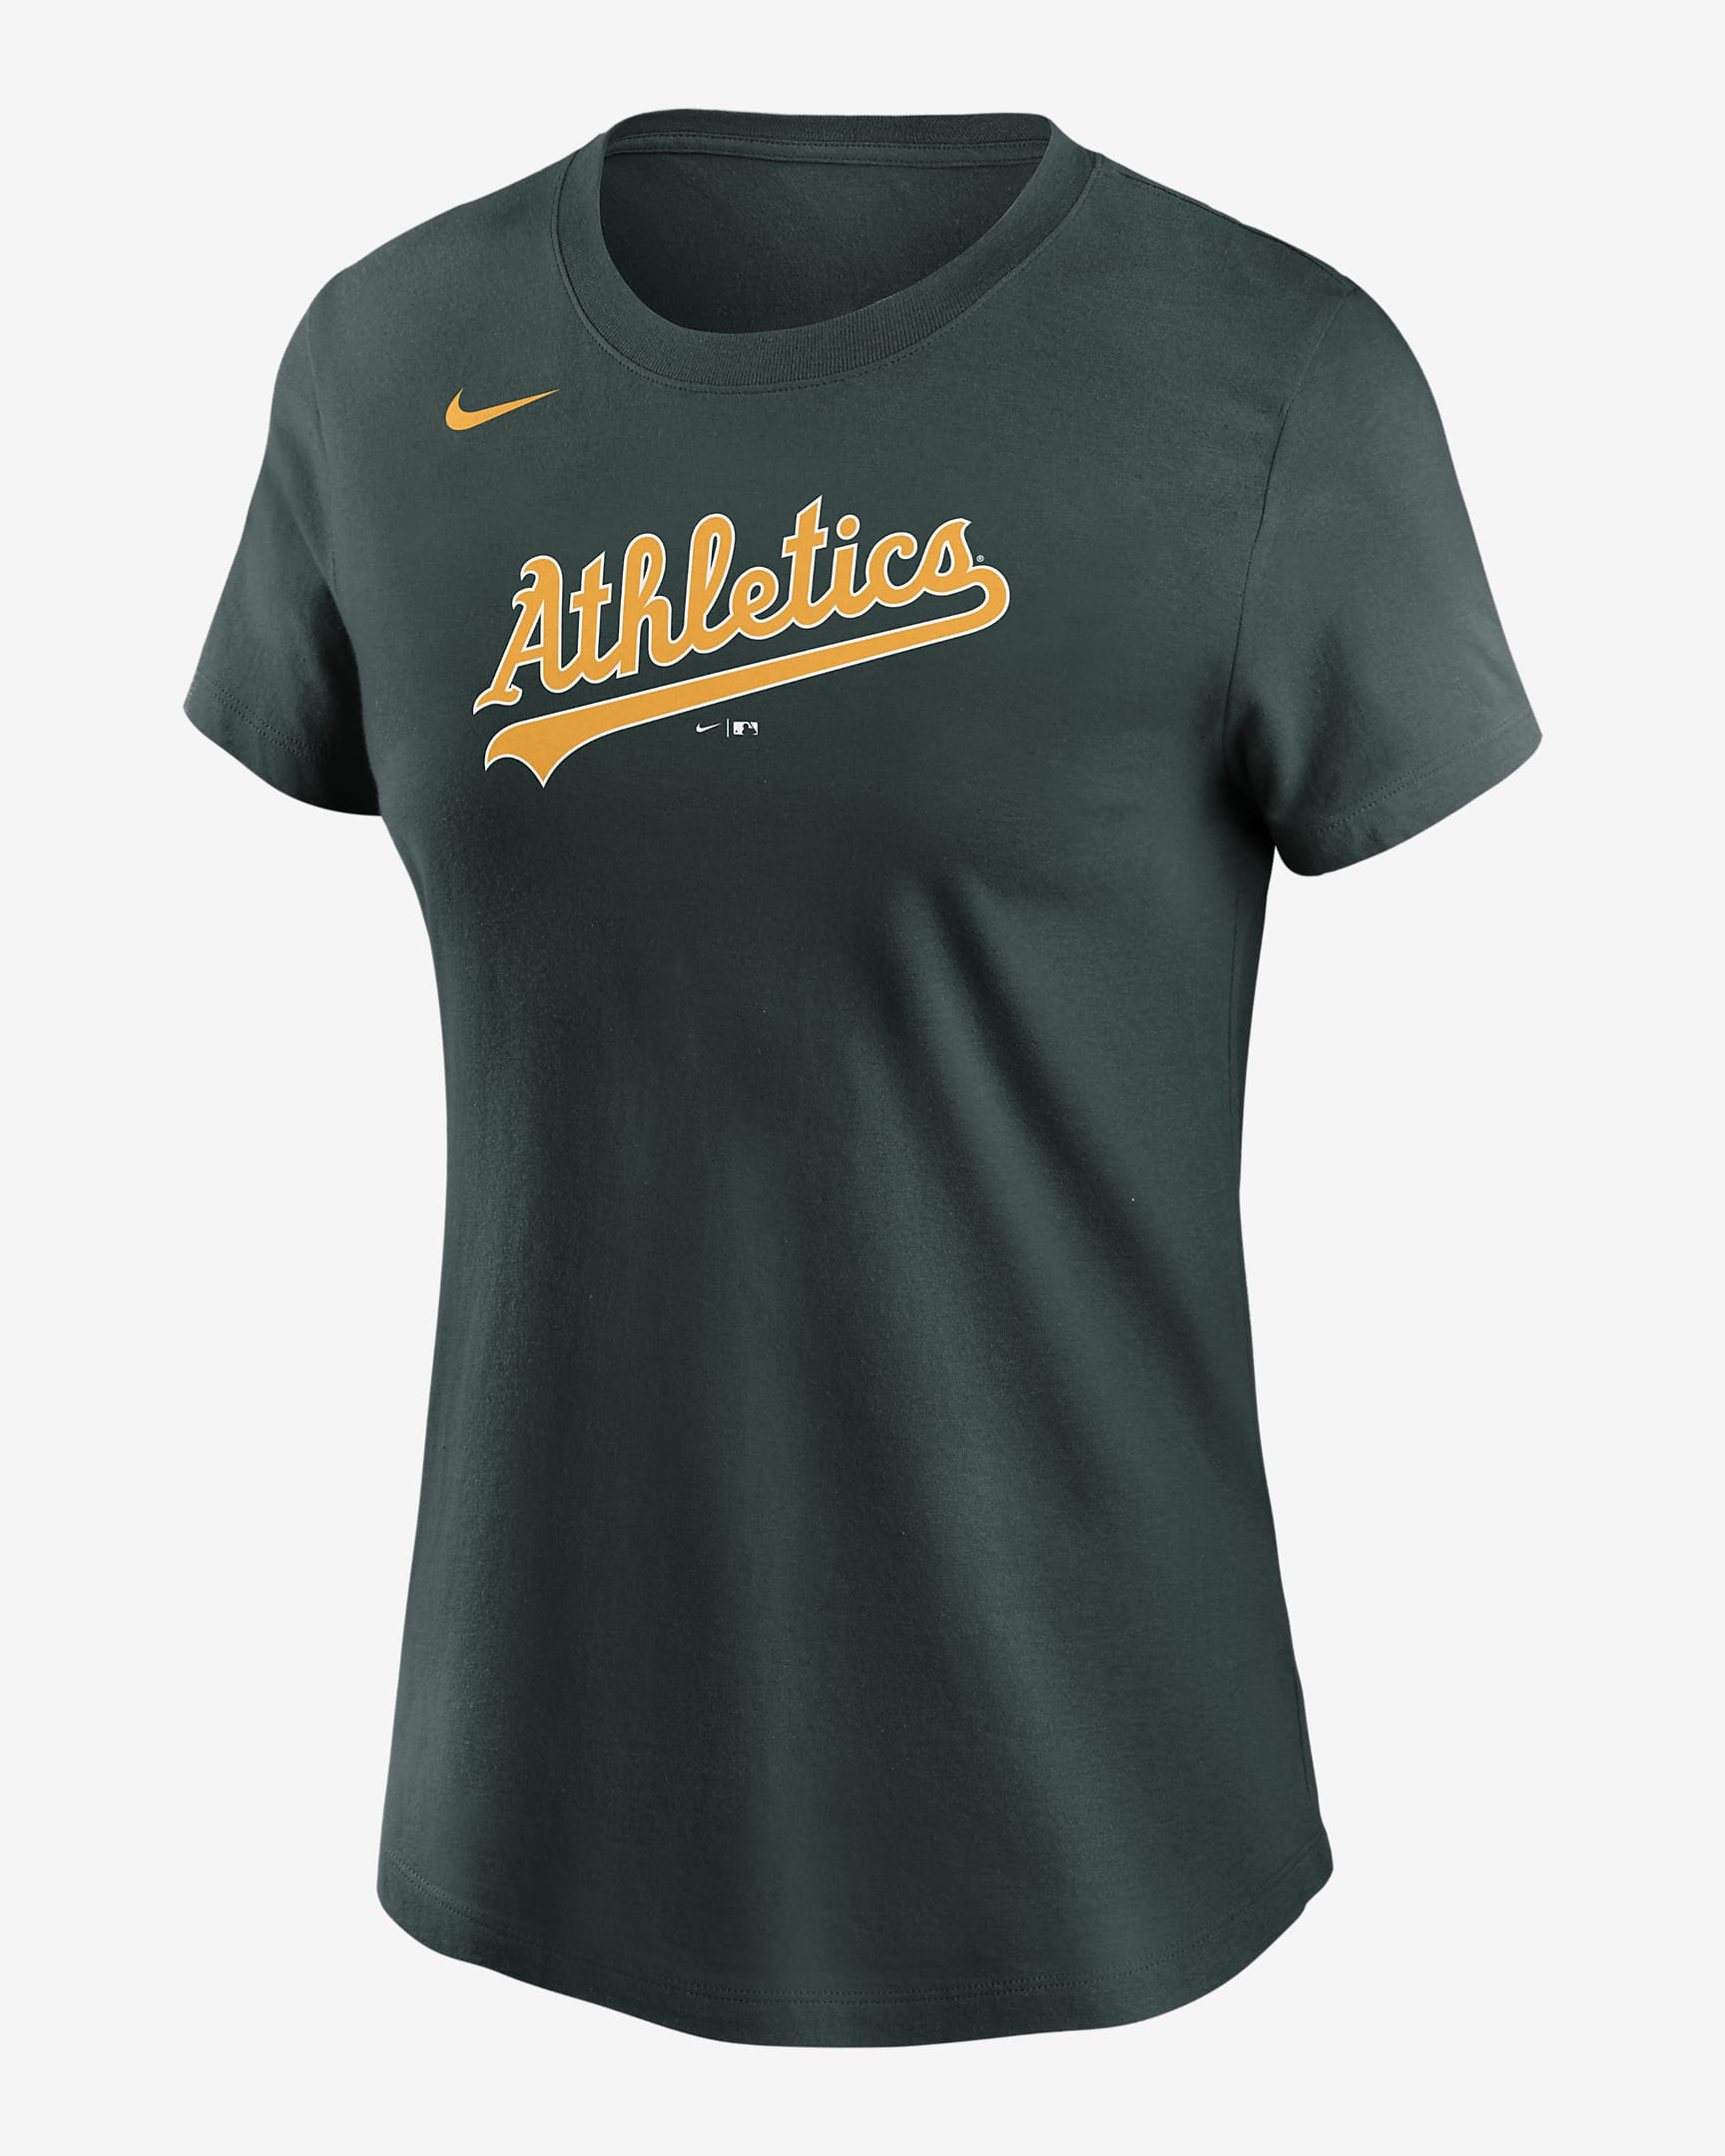 Playera para mujer MLB Oakland Athletics (Khris Davis). Nike.com